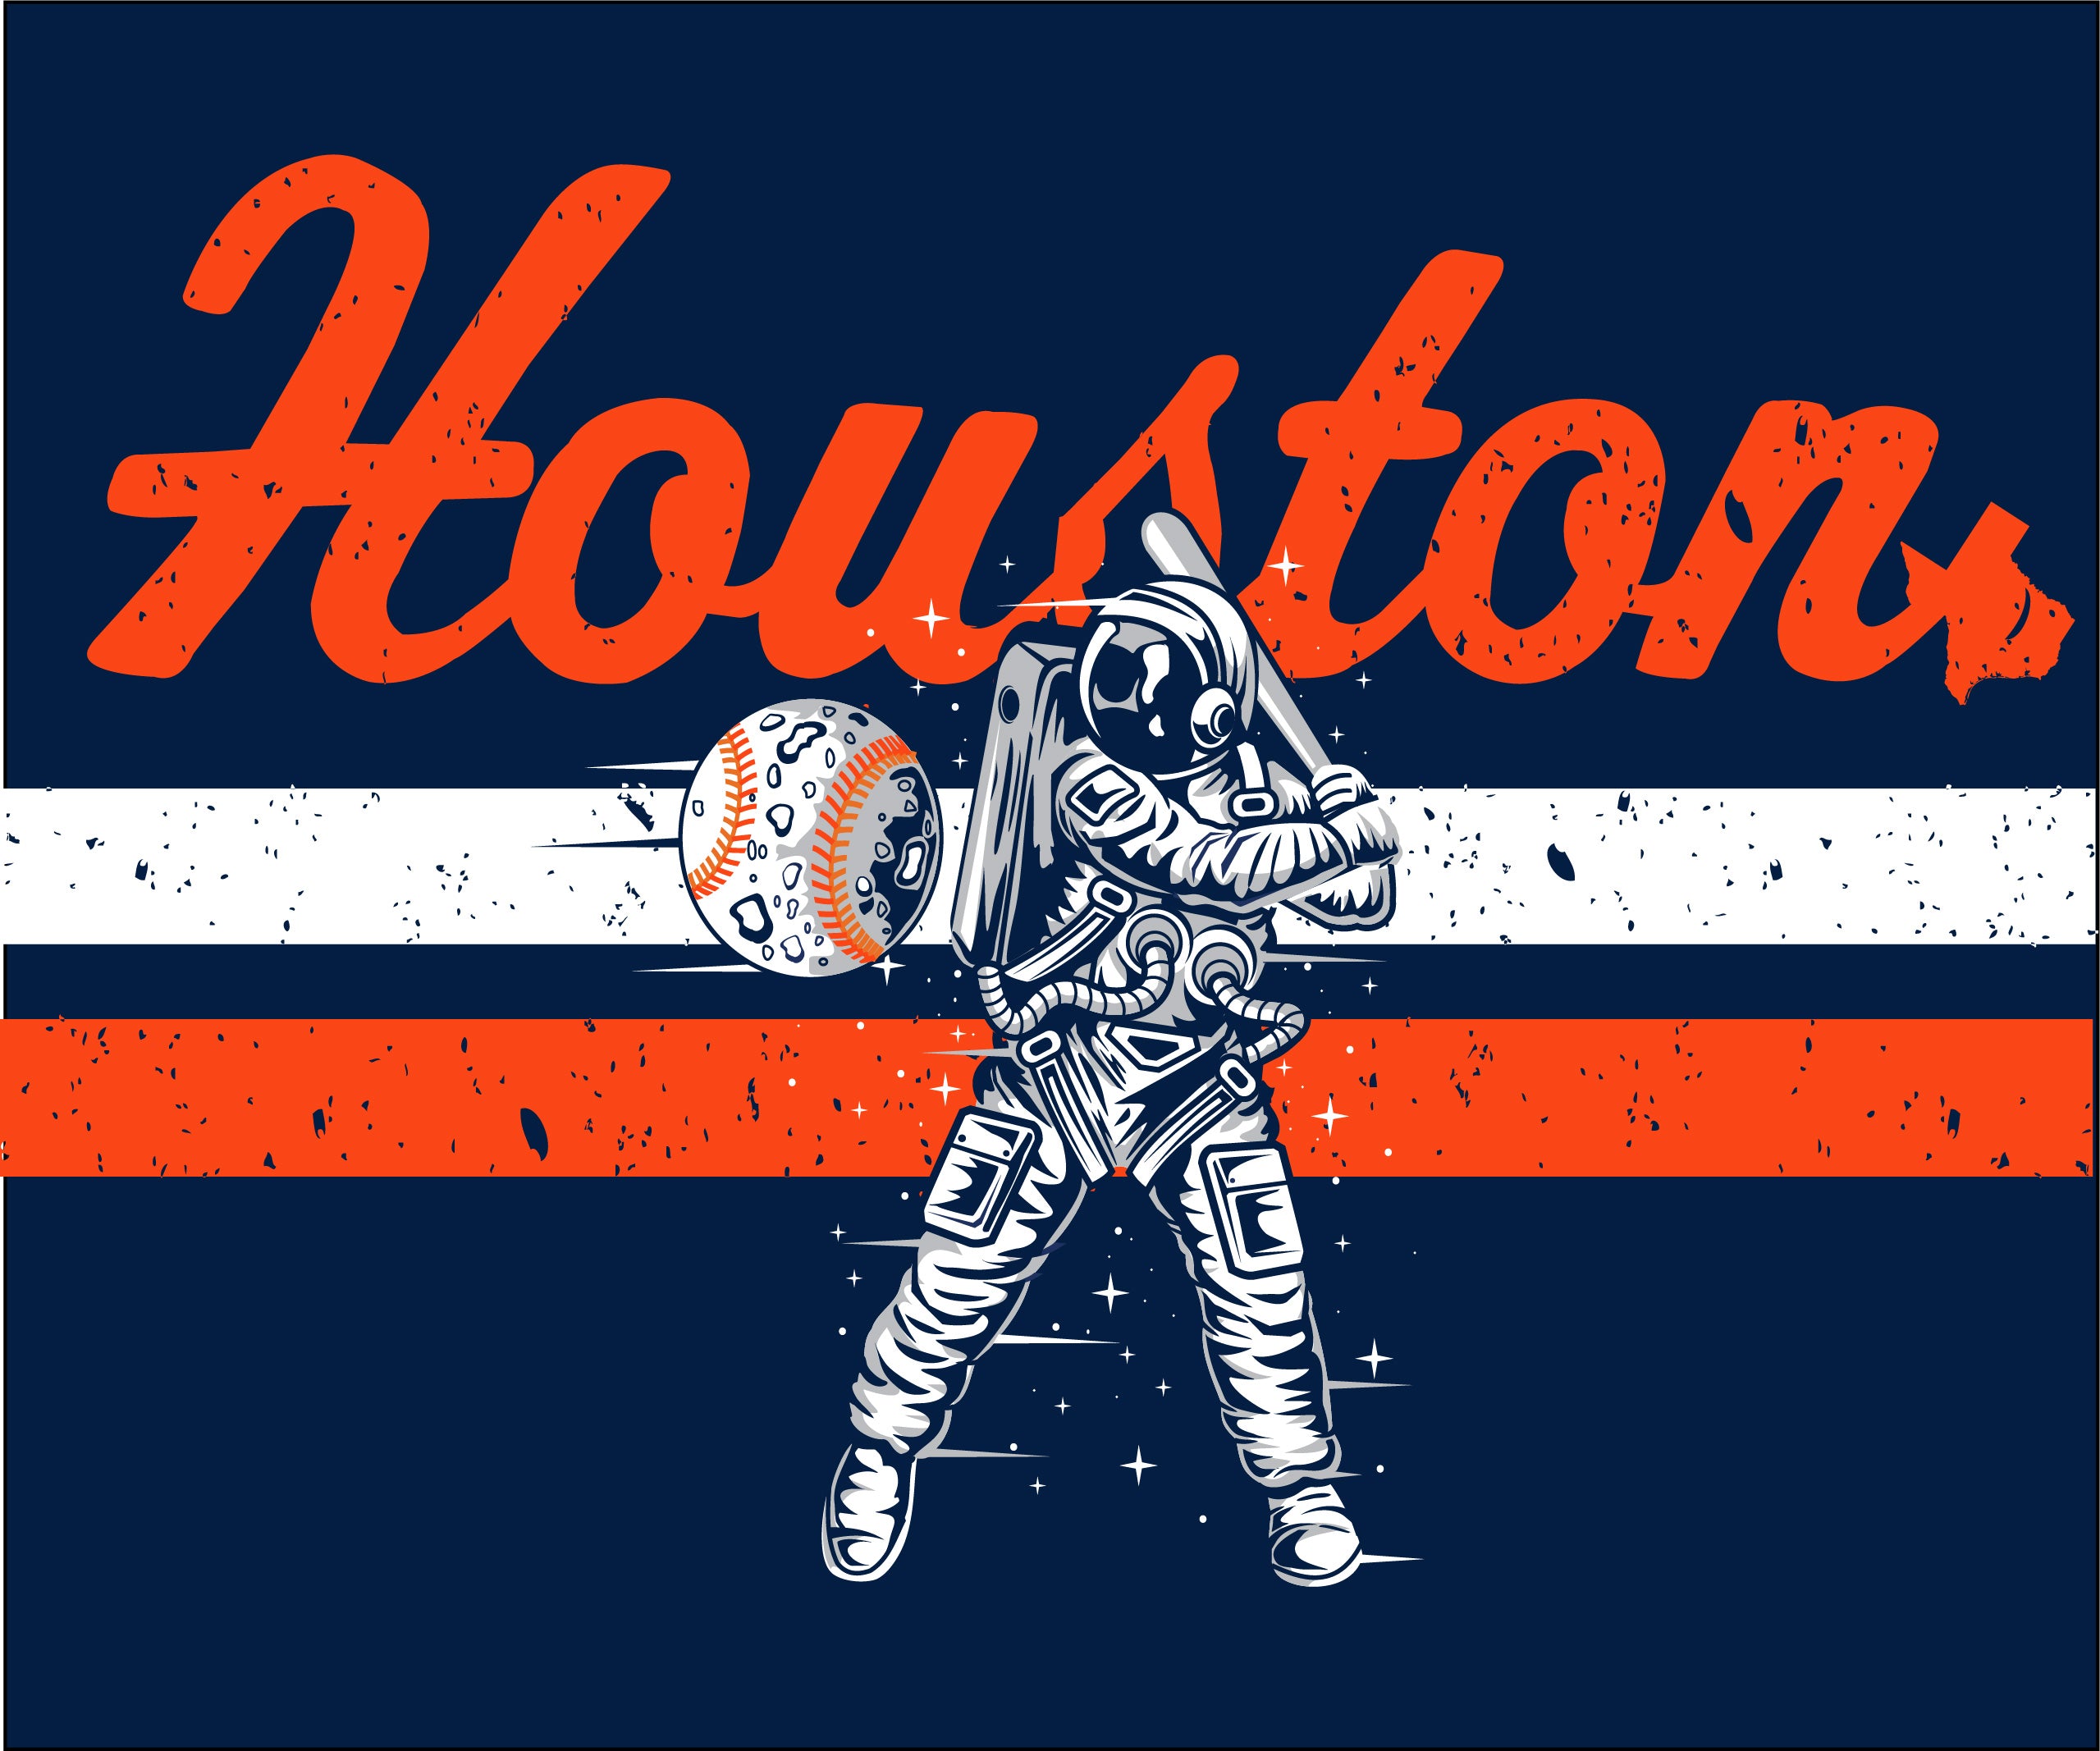 Houston Astros on X: Customs for Crush City. @Nardgotsole_htx